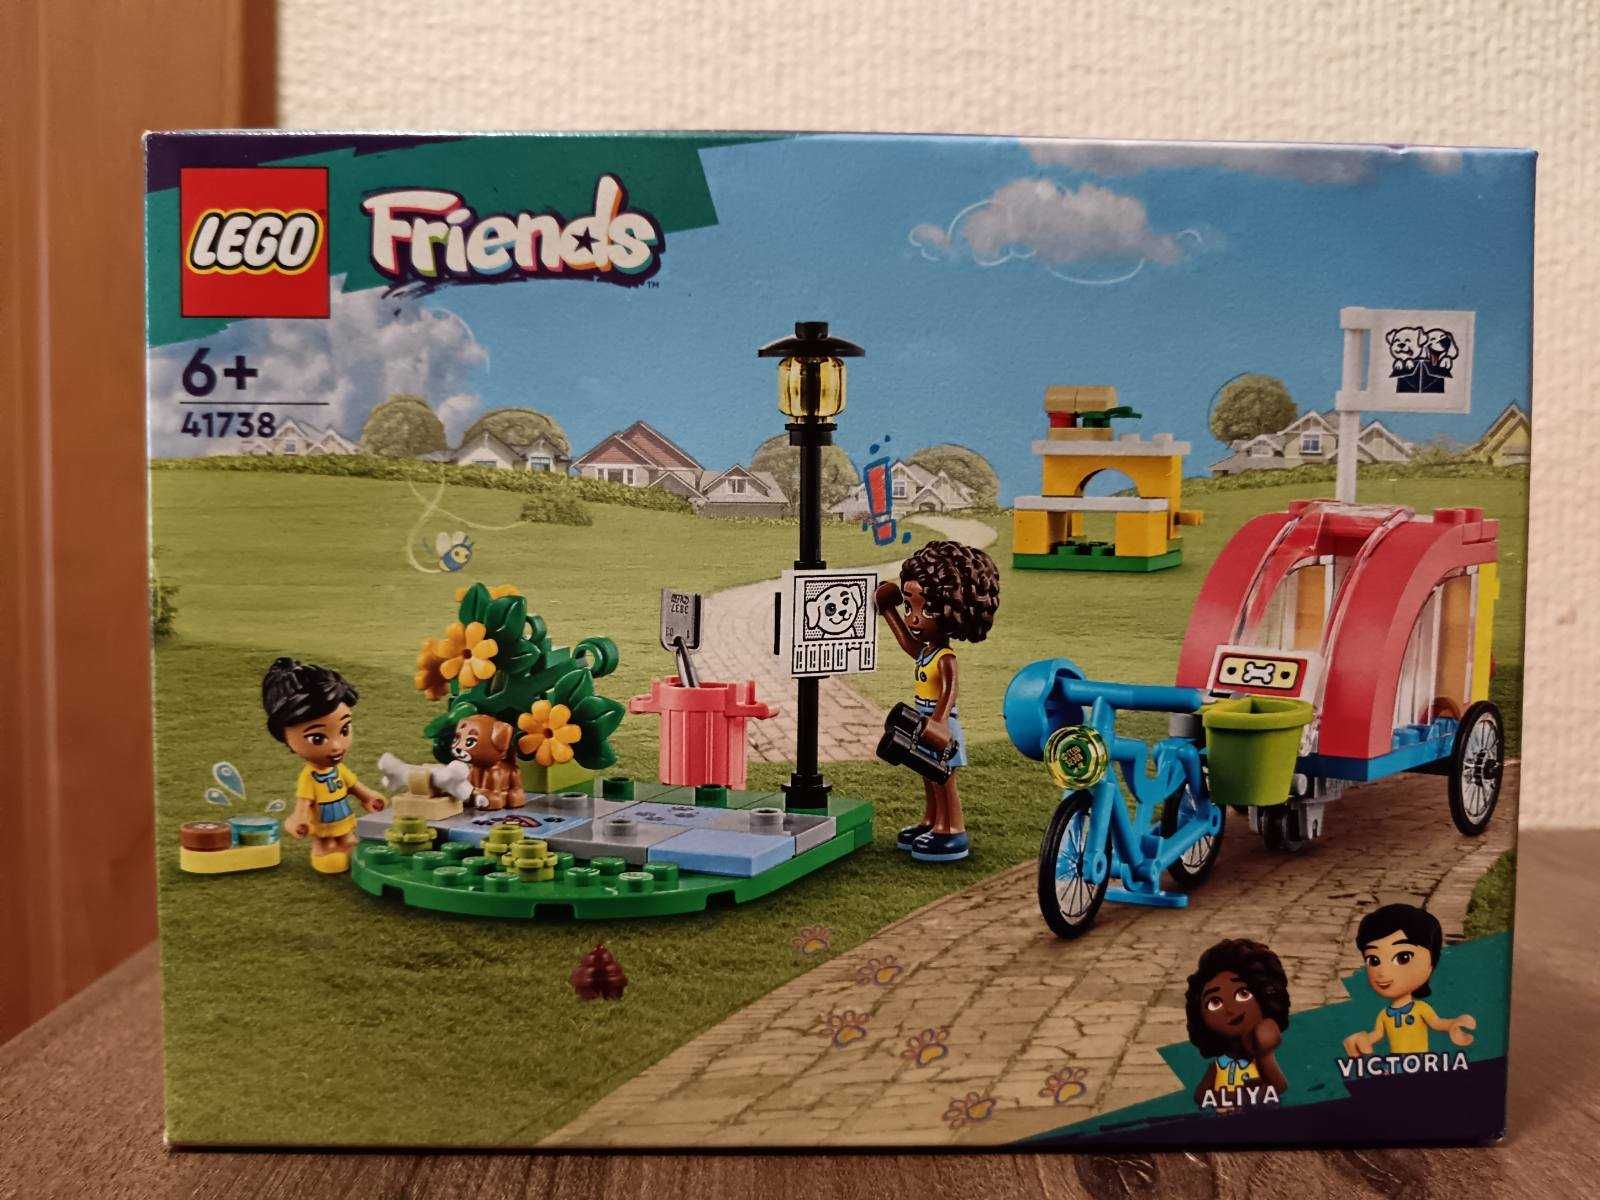 LEGO Friends модели - 41390,41739,41443,41738,41697,41677,41425,30633